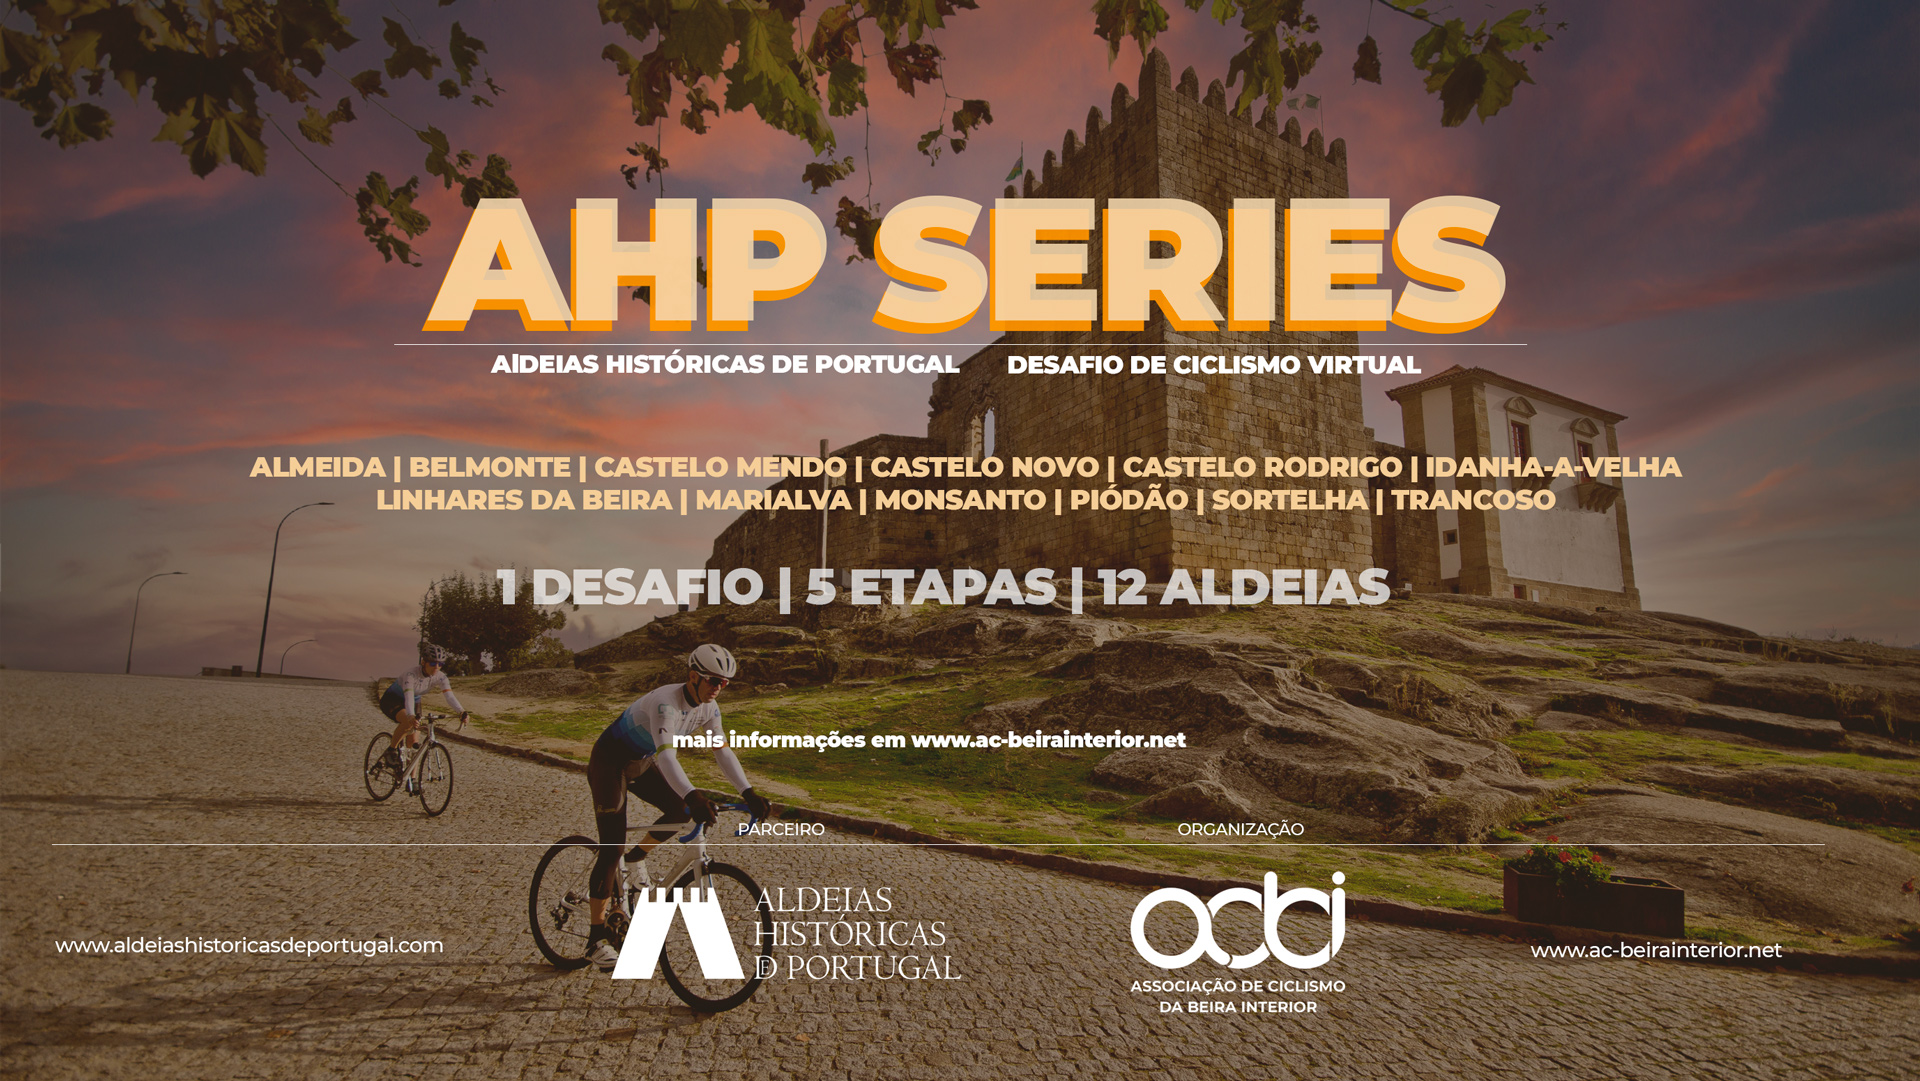 AHP Series - Desafio virtual nas Aldeias Históricas de Portugal